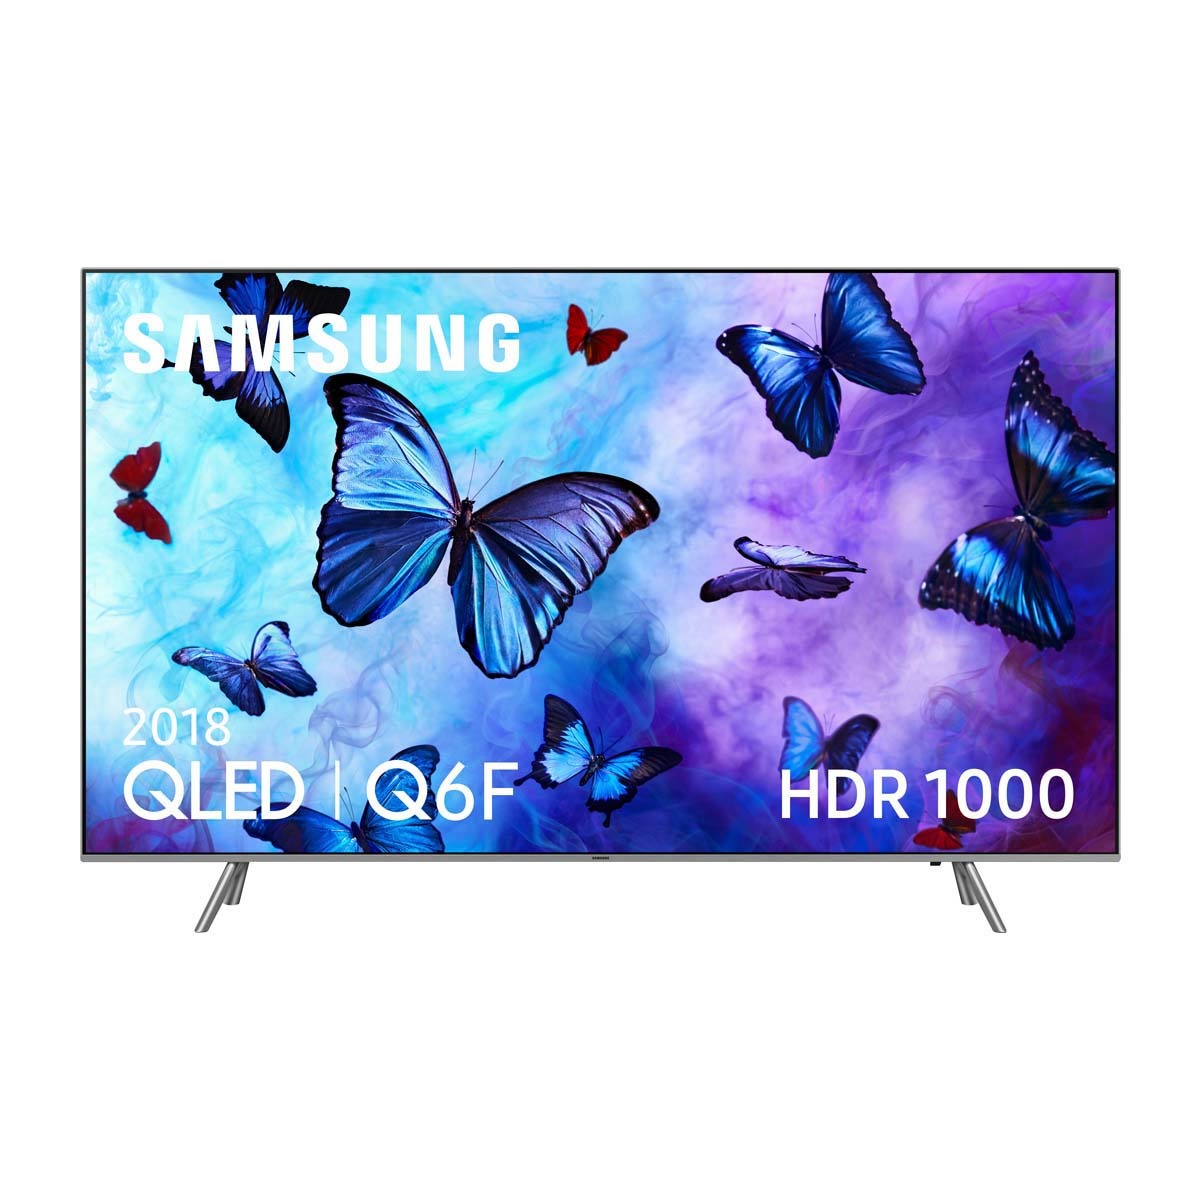 SAMSUNG TV QLED(65") Samsung QE65Q6FN 4K HDR Smart TV